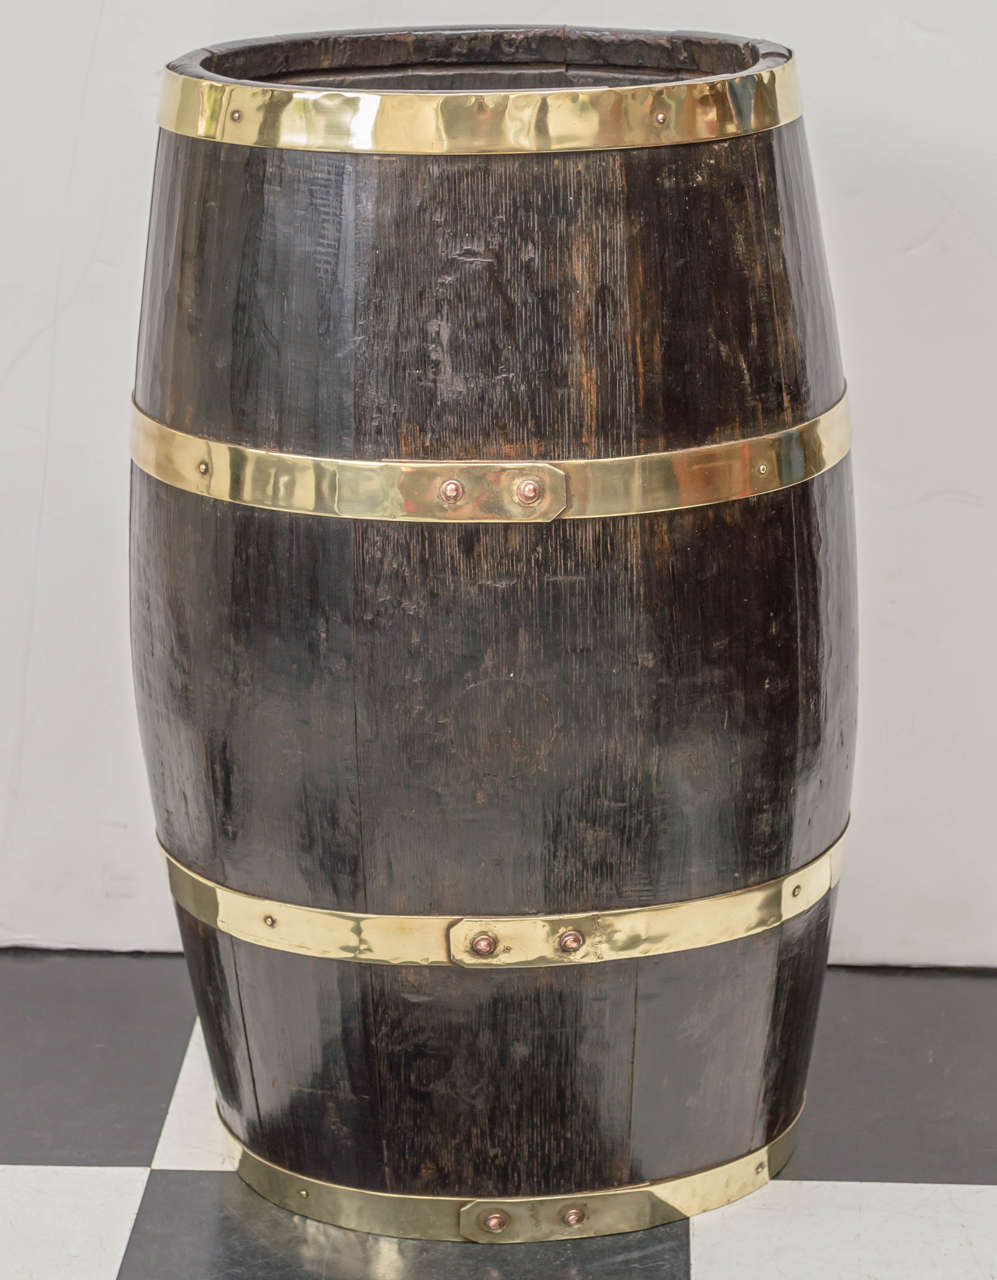 20th Century English Barrel Umbrella Container from a WWII Commemorative Rum Barrel